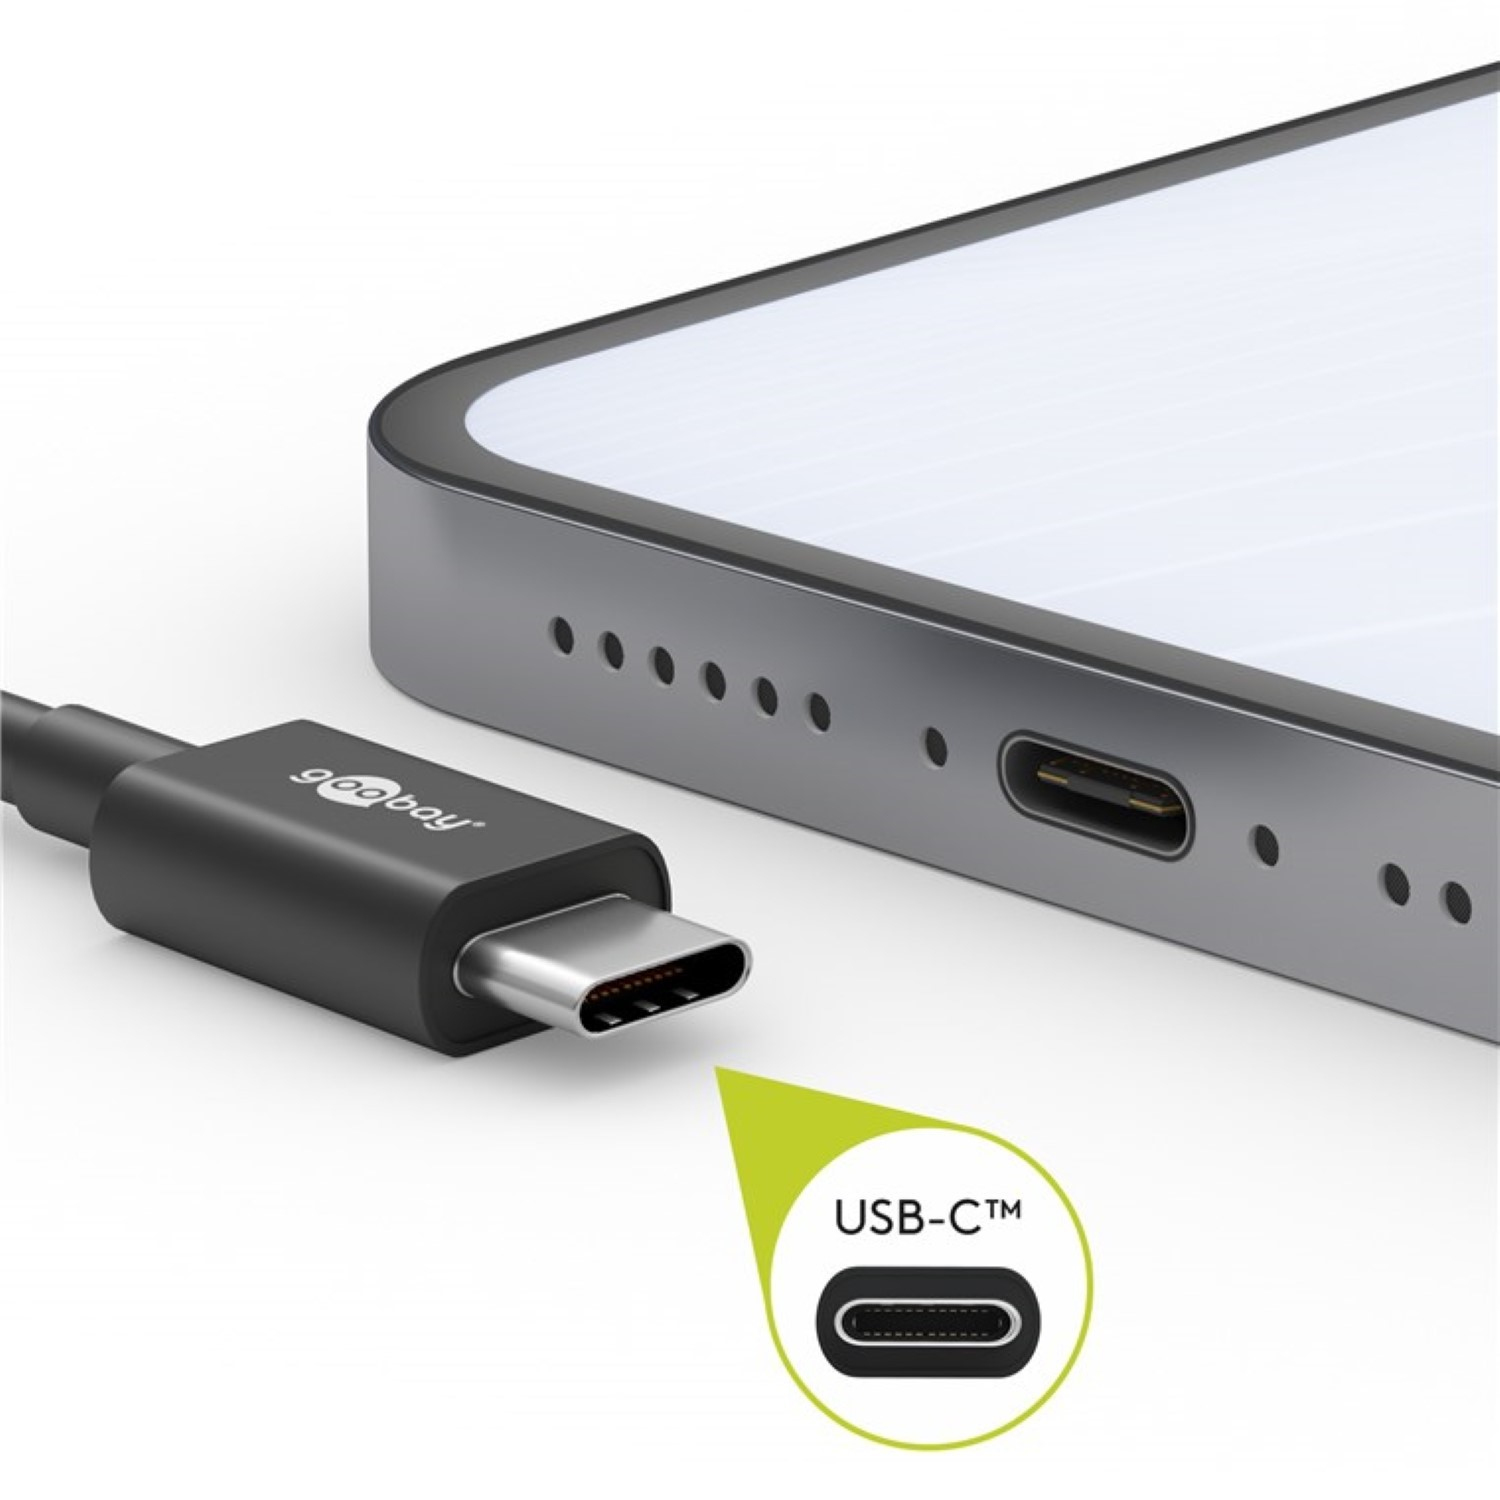 GOOBAY Lade-/Datenkabel ausziehbar USB C Kabel schwarz Datenkabel, Ladekabel